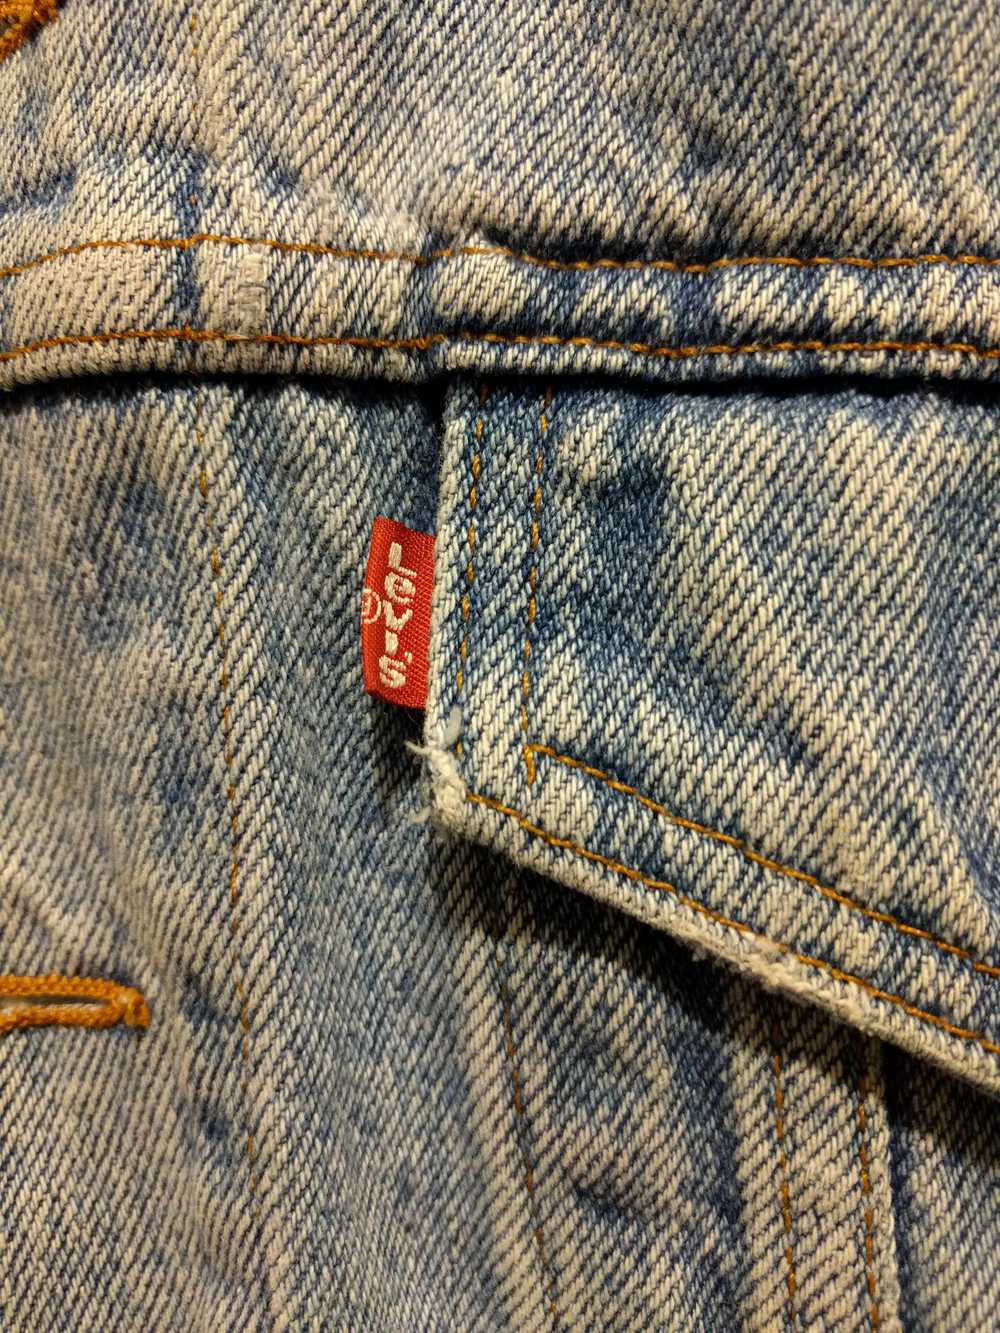 Levi's Vintage Denim Jean Jacket big E red tab - image 3